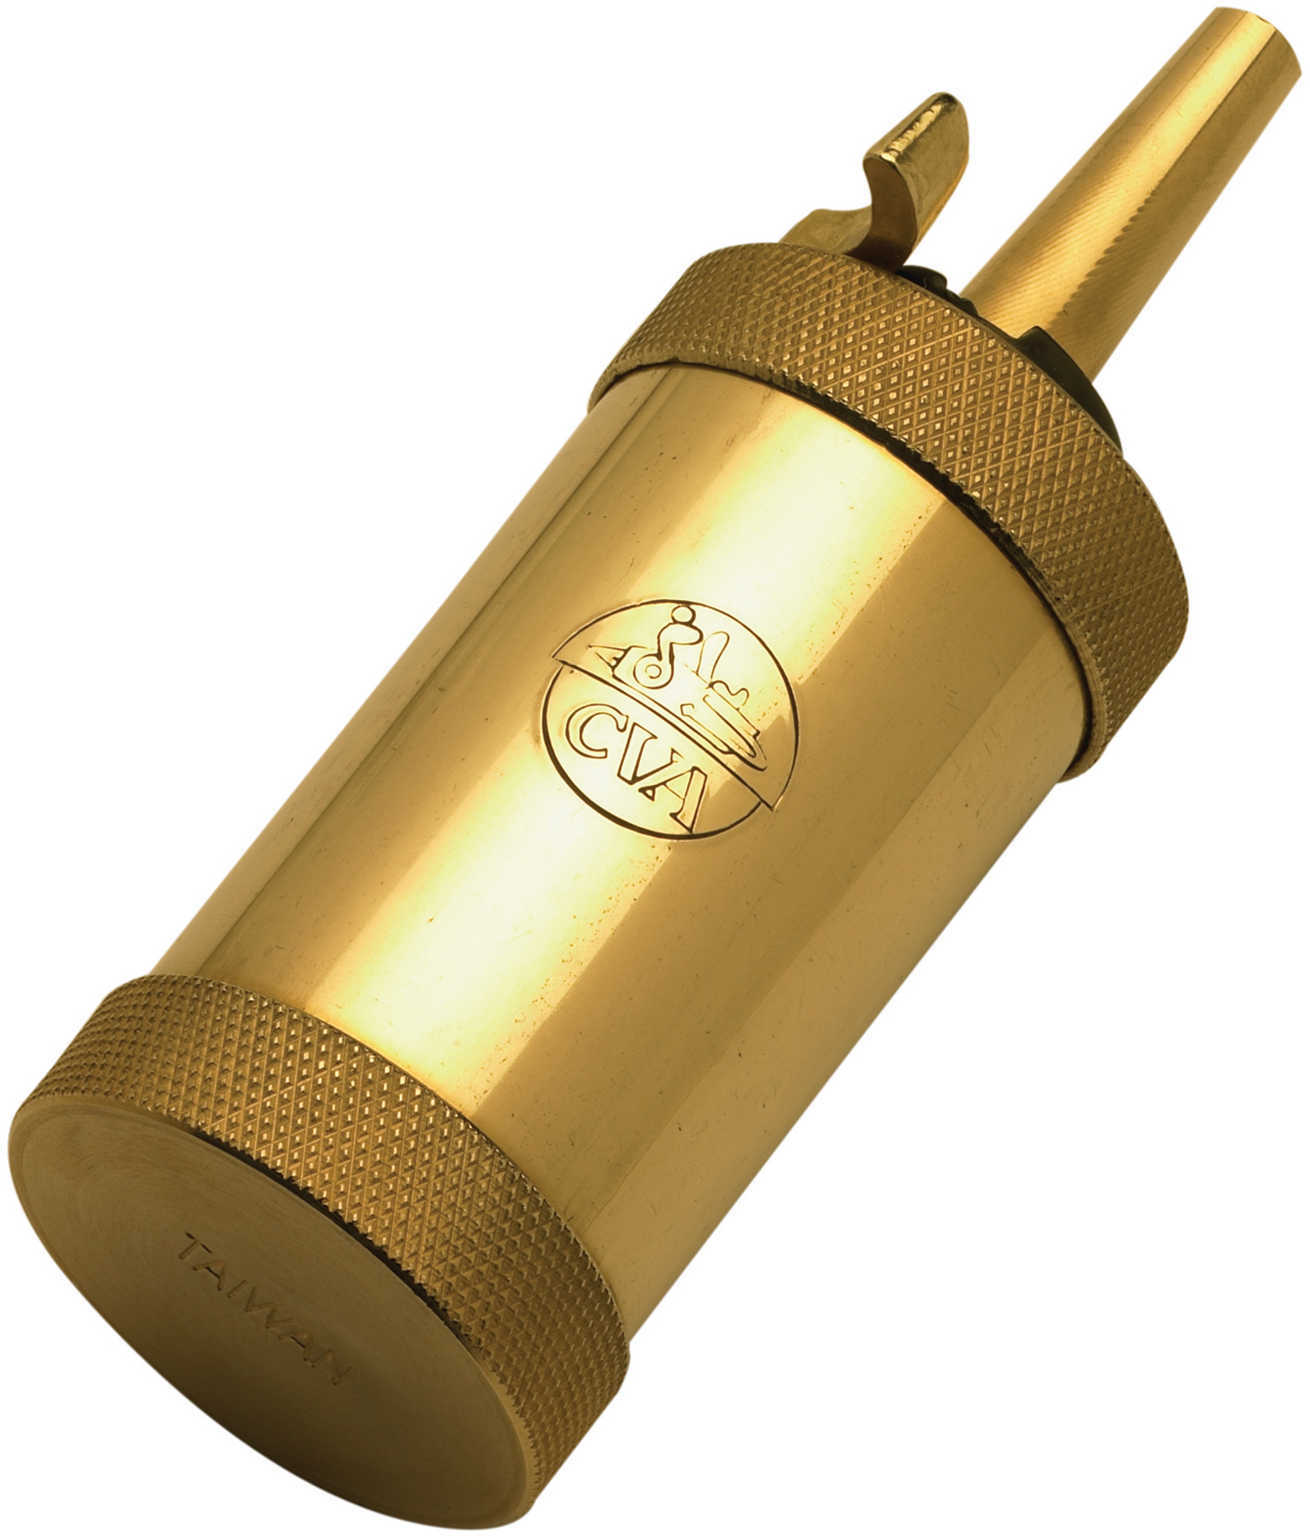 CVA Brass Field Model Cylinder Flask Md: AC1400A